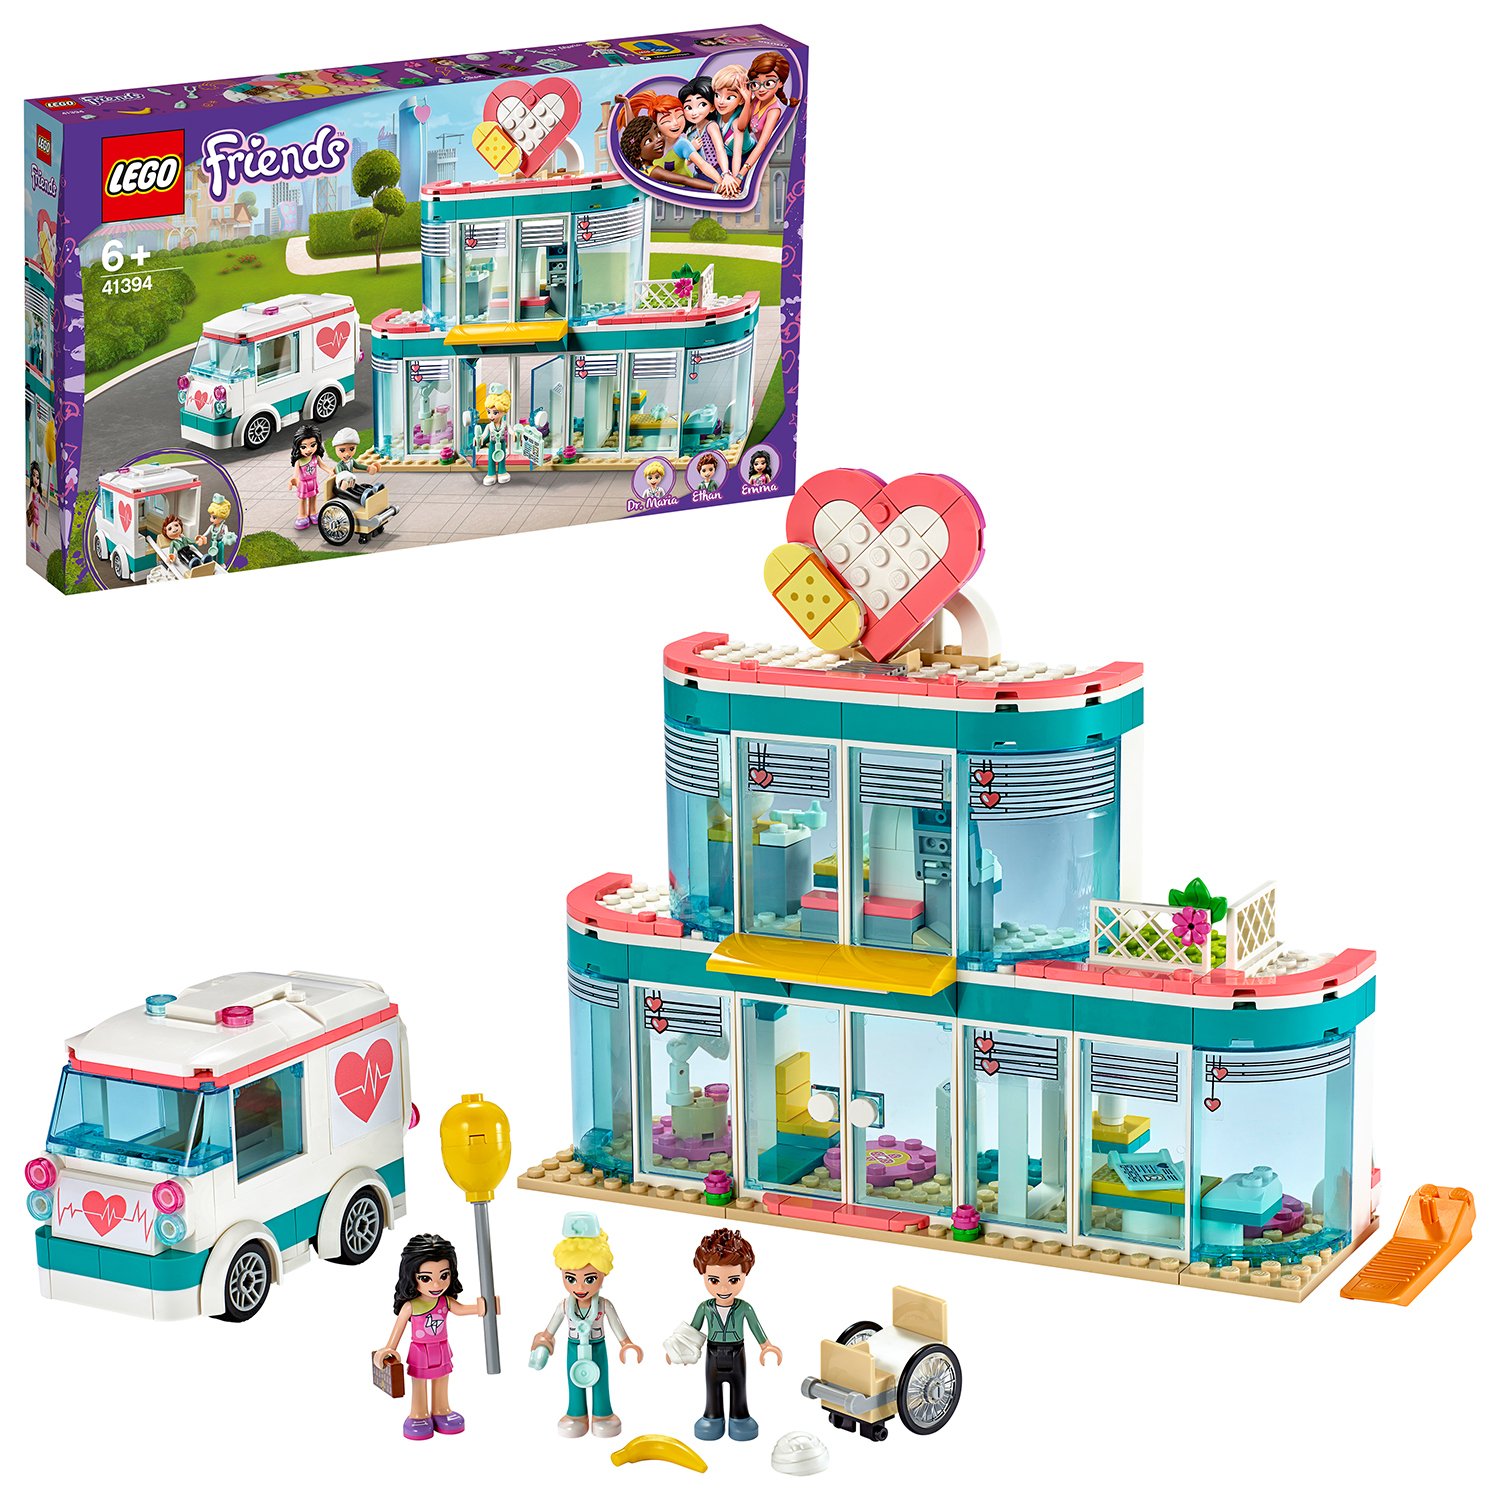 LEGO Friends Heartlake City Hospital Playset Review